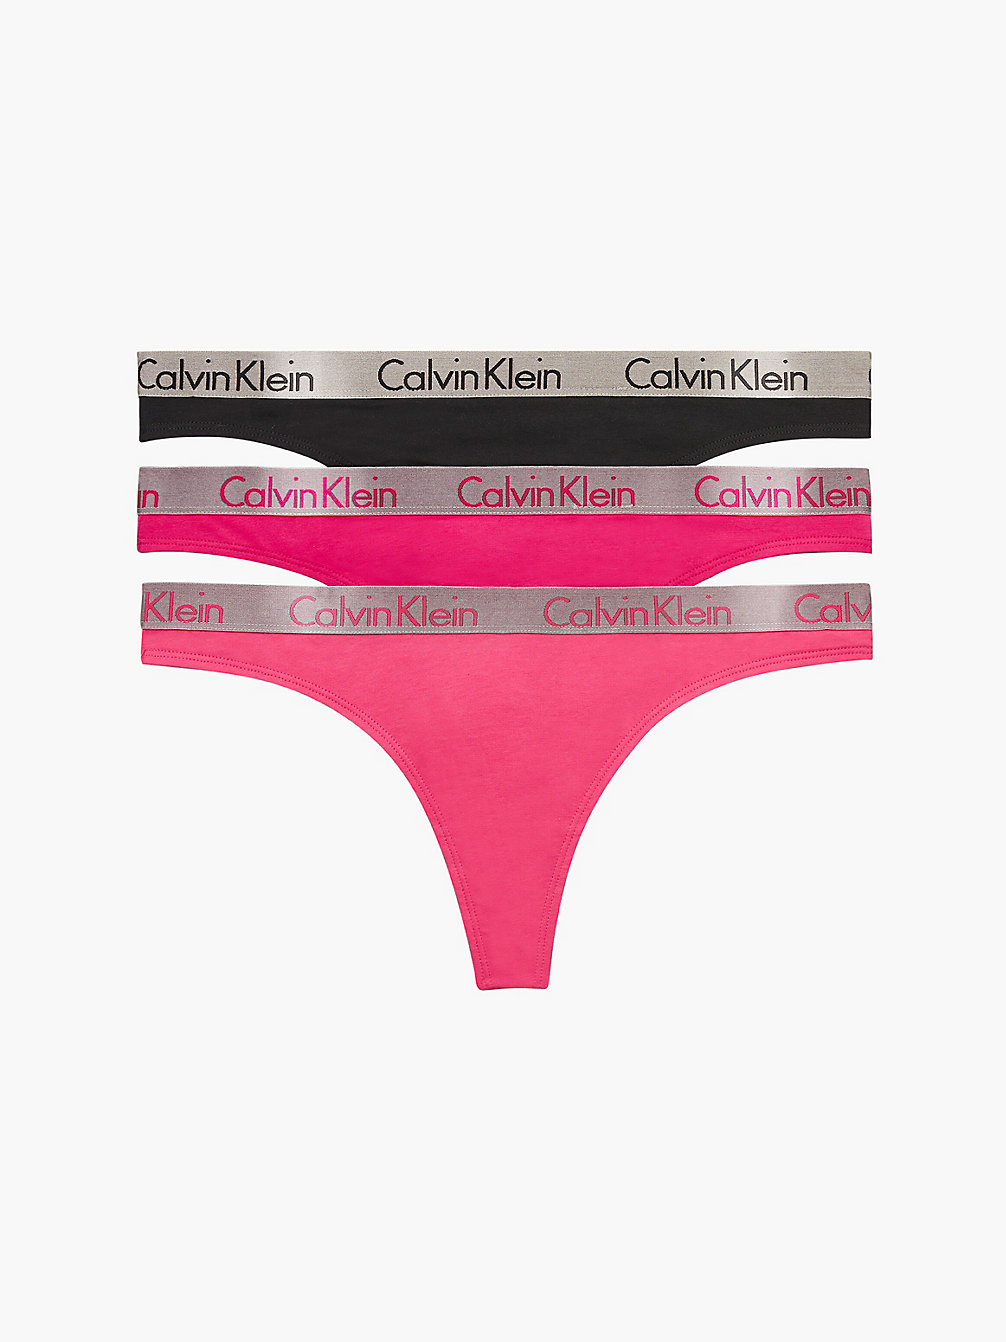 PINK SPLENDOR/BRIAR ROSE/BLACK 3 Pack Thongs - Radiant Cotton undefined women Calvin Klein